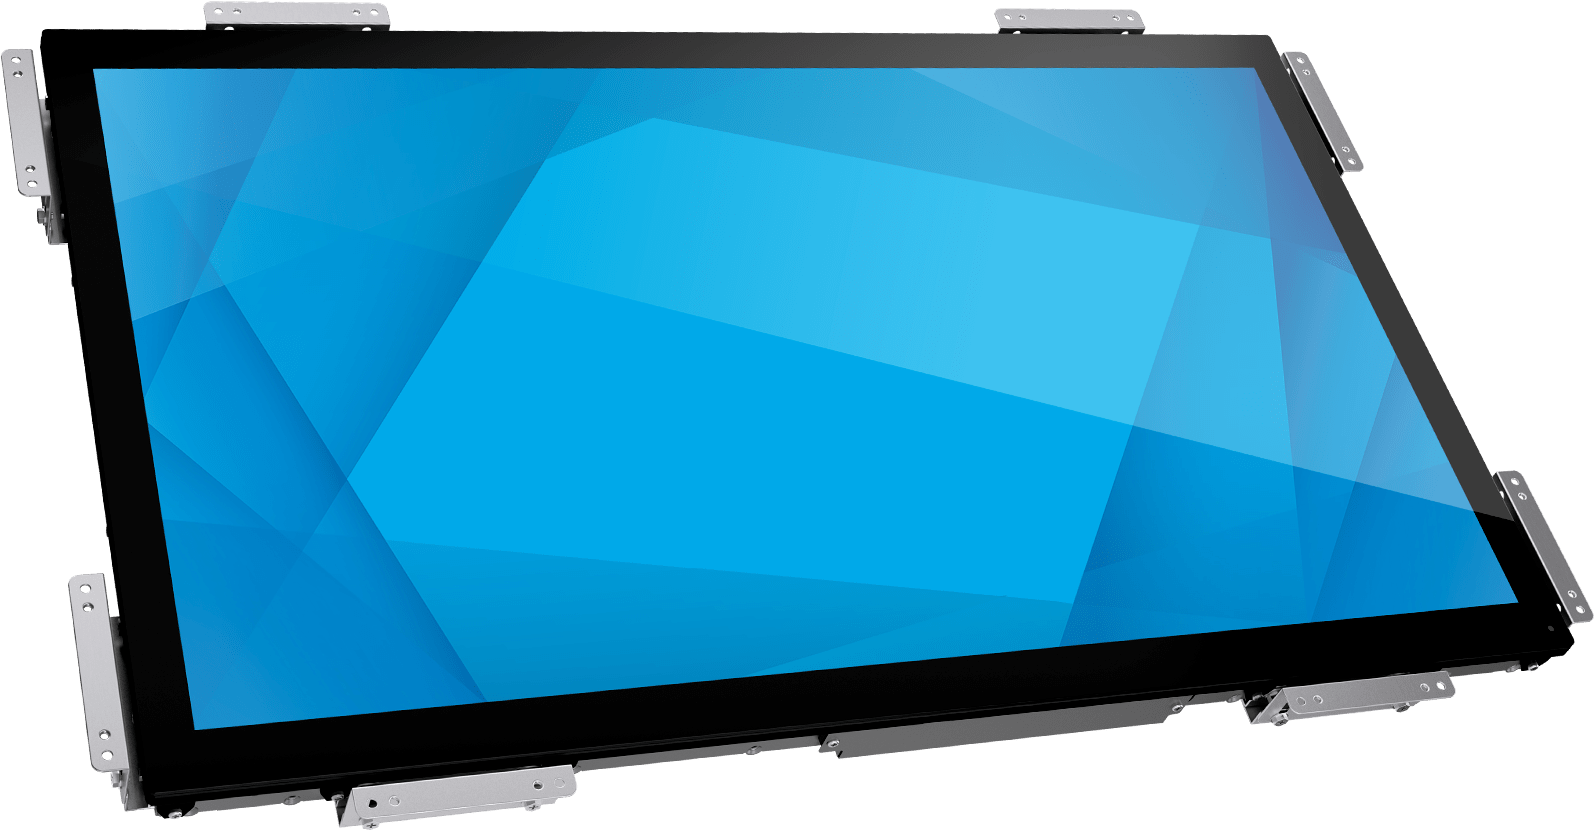 Portaretratos Digital Vealife Touchscreen Wifi FHD -Negro